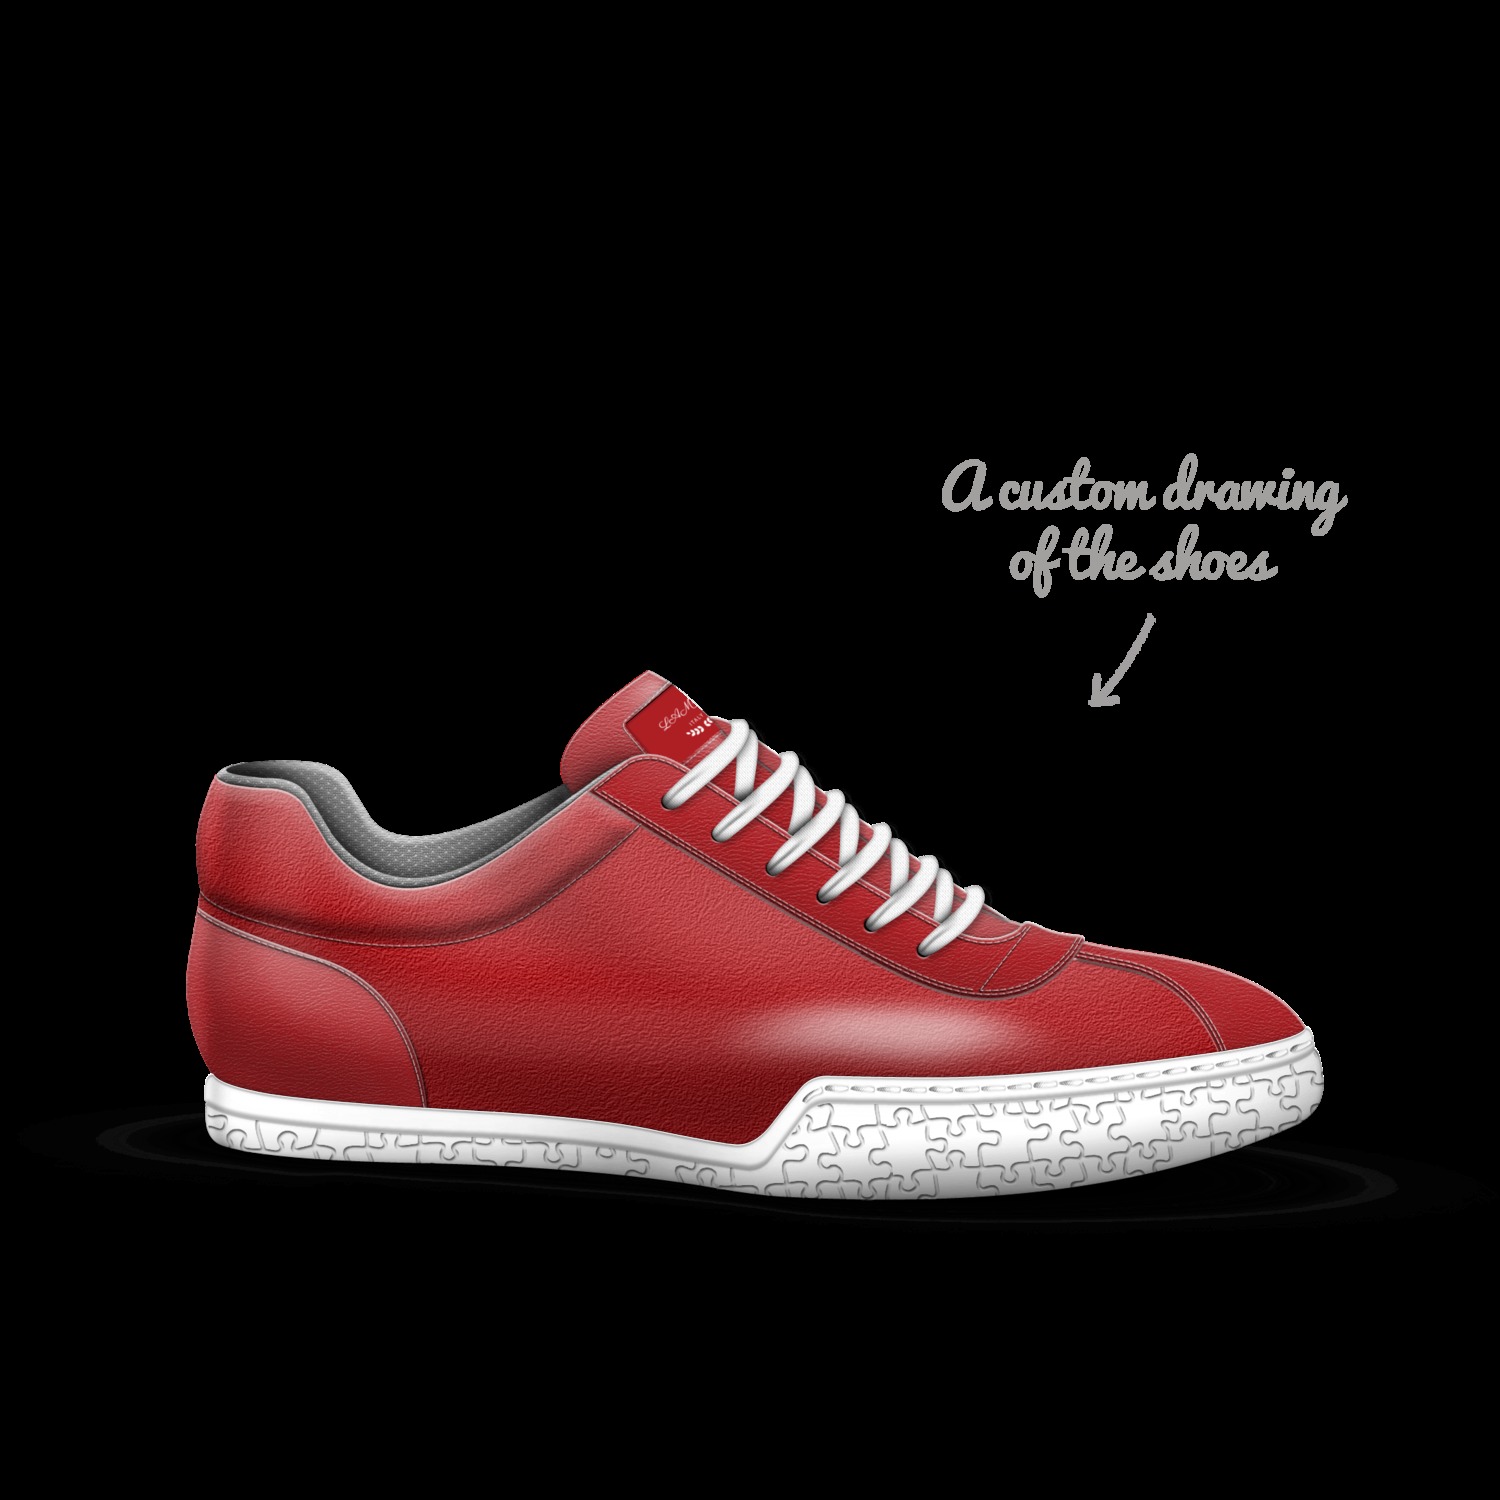 LAMBO | A Custom Shoe concept by Lam Huynh